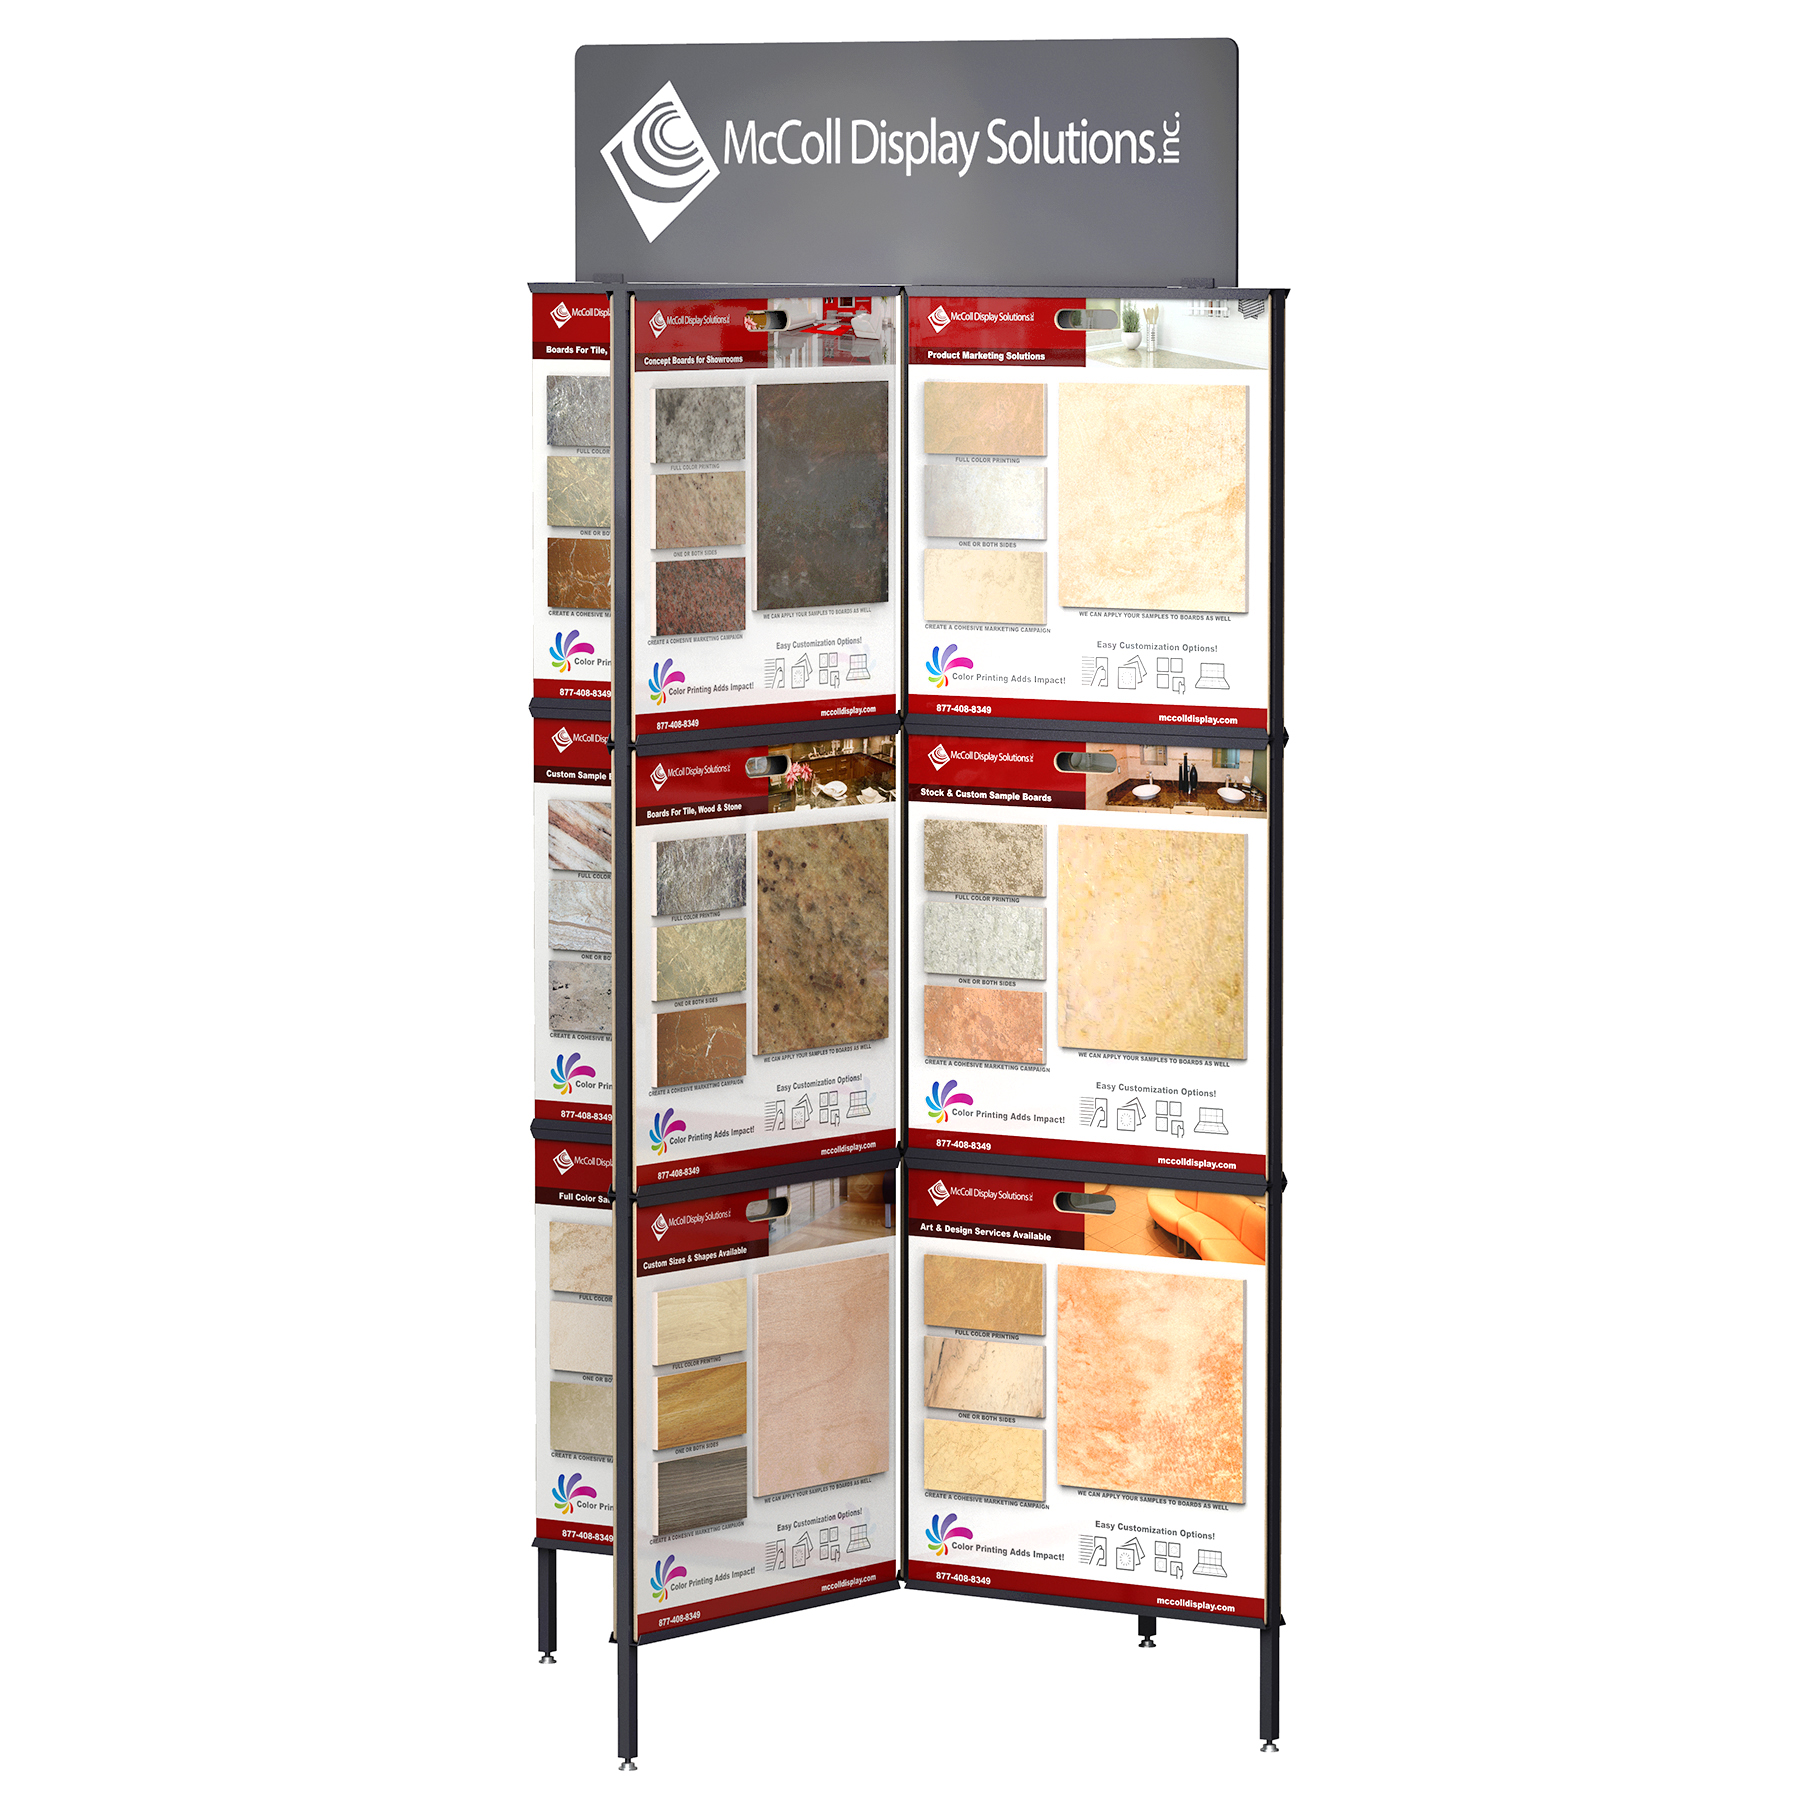 CD40 Tower Sample Board Tile Stone Marble Hardwood System Showroom Displays McColl Display